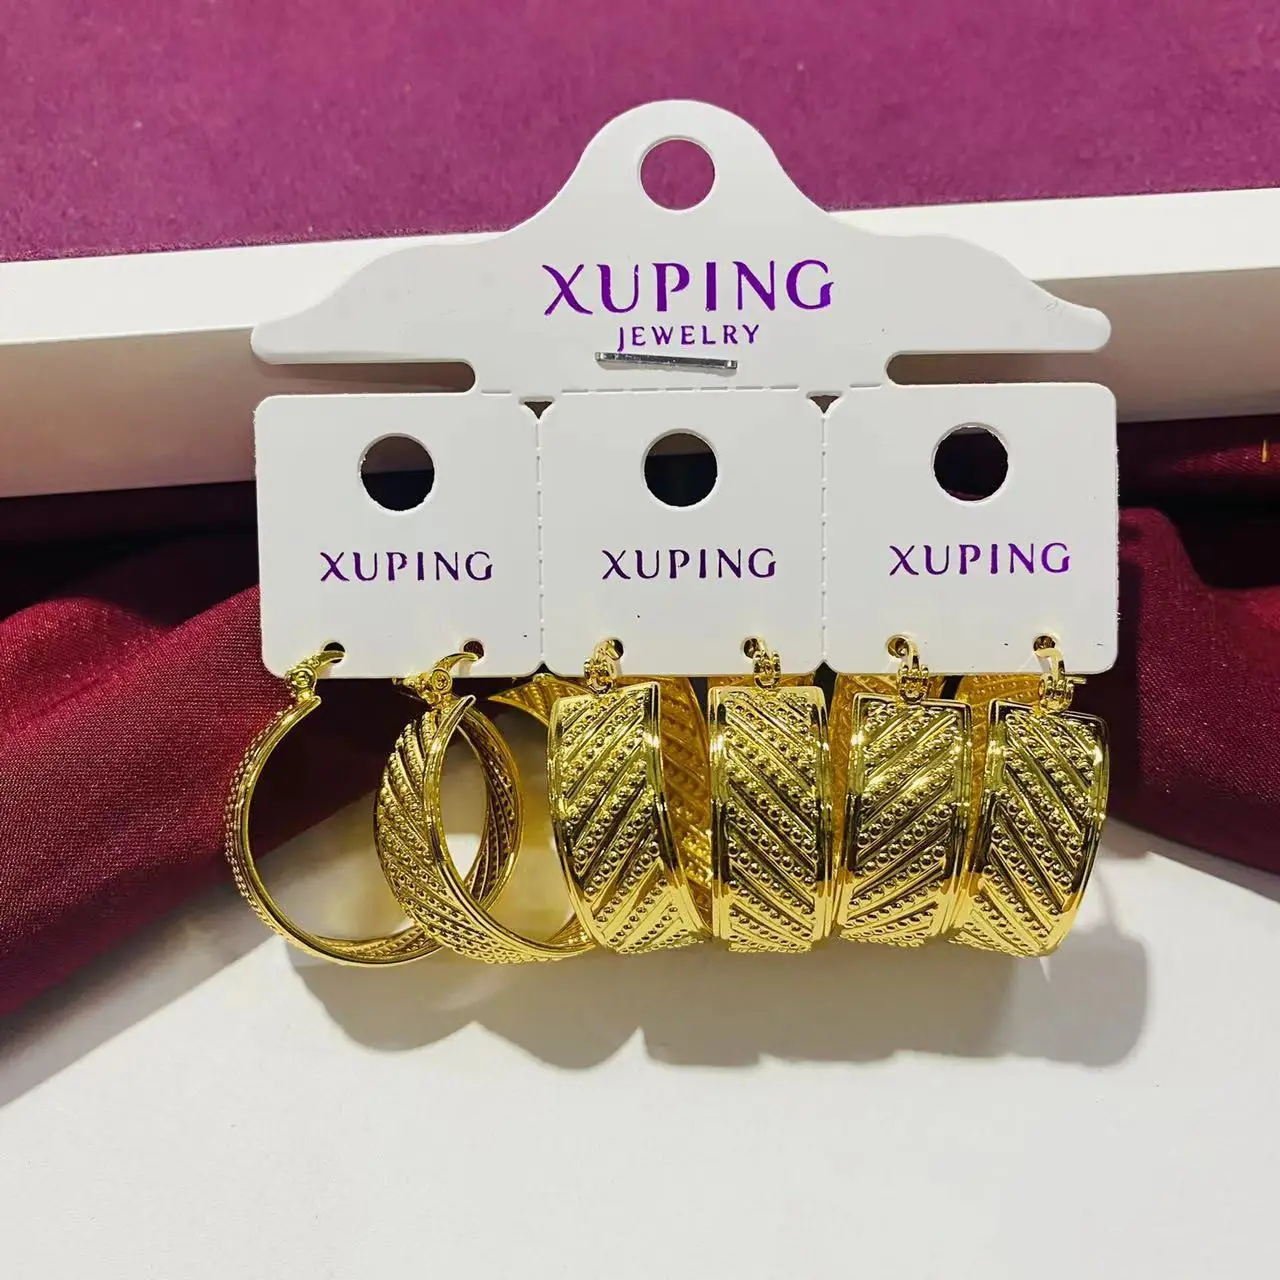 212 xupingジュエリー工場卸売送料無料サンプルマルチスタイル24kゴールドメッキフープイヤリング